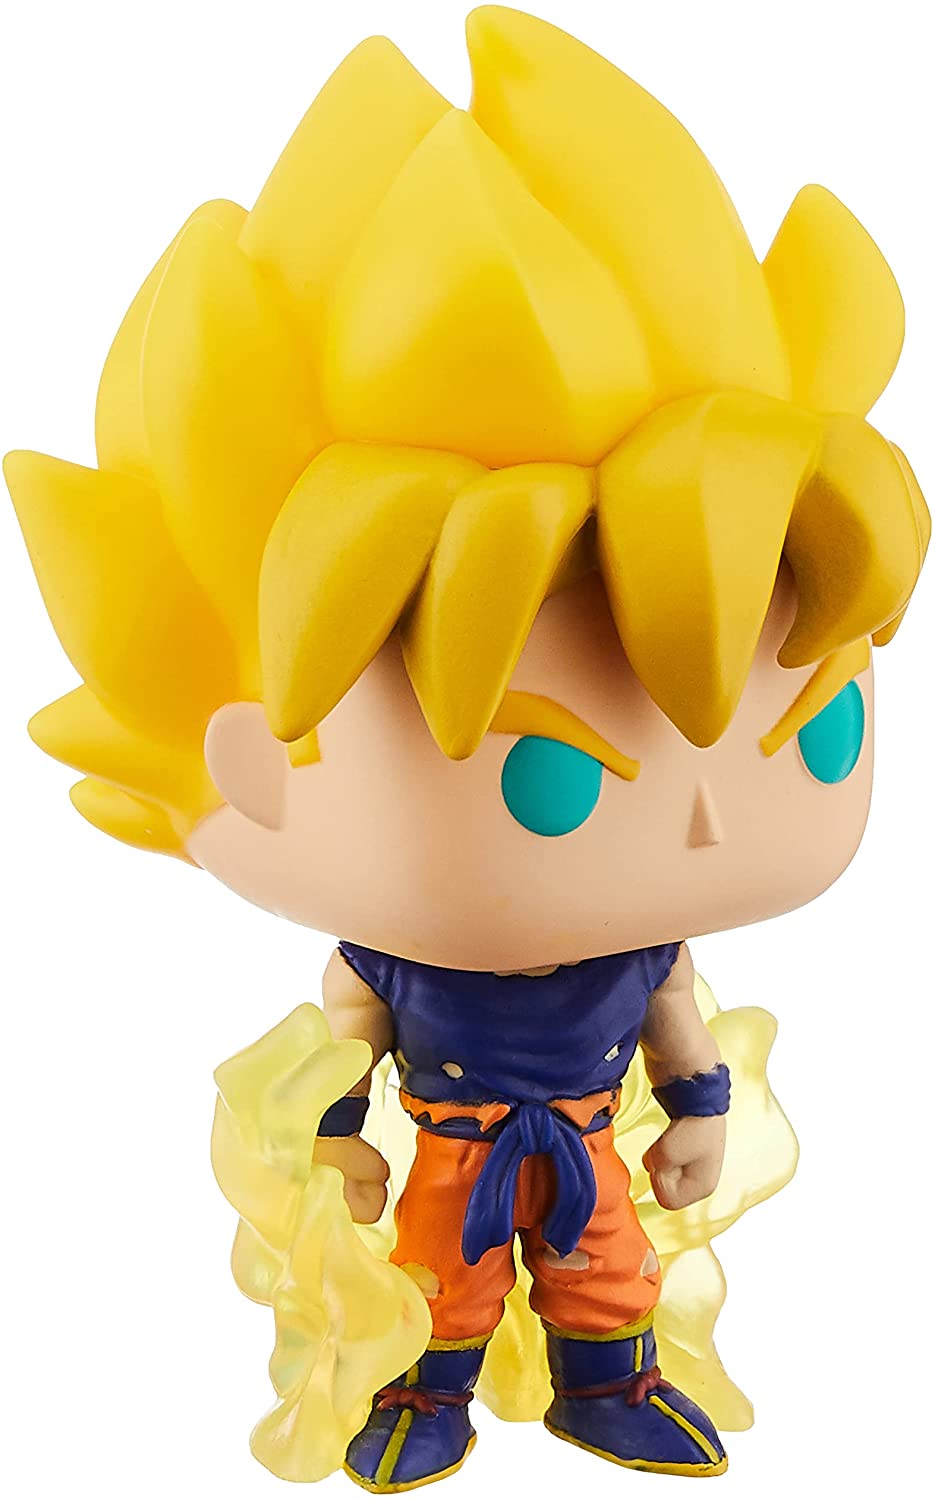 Pop! Super Saiyan Goku